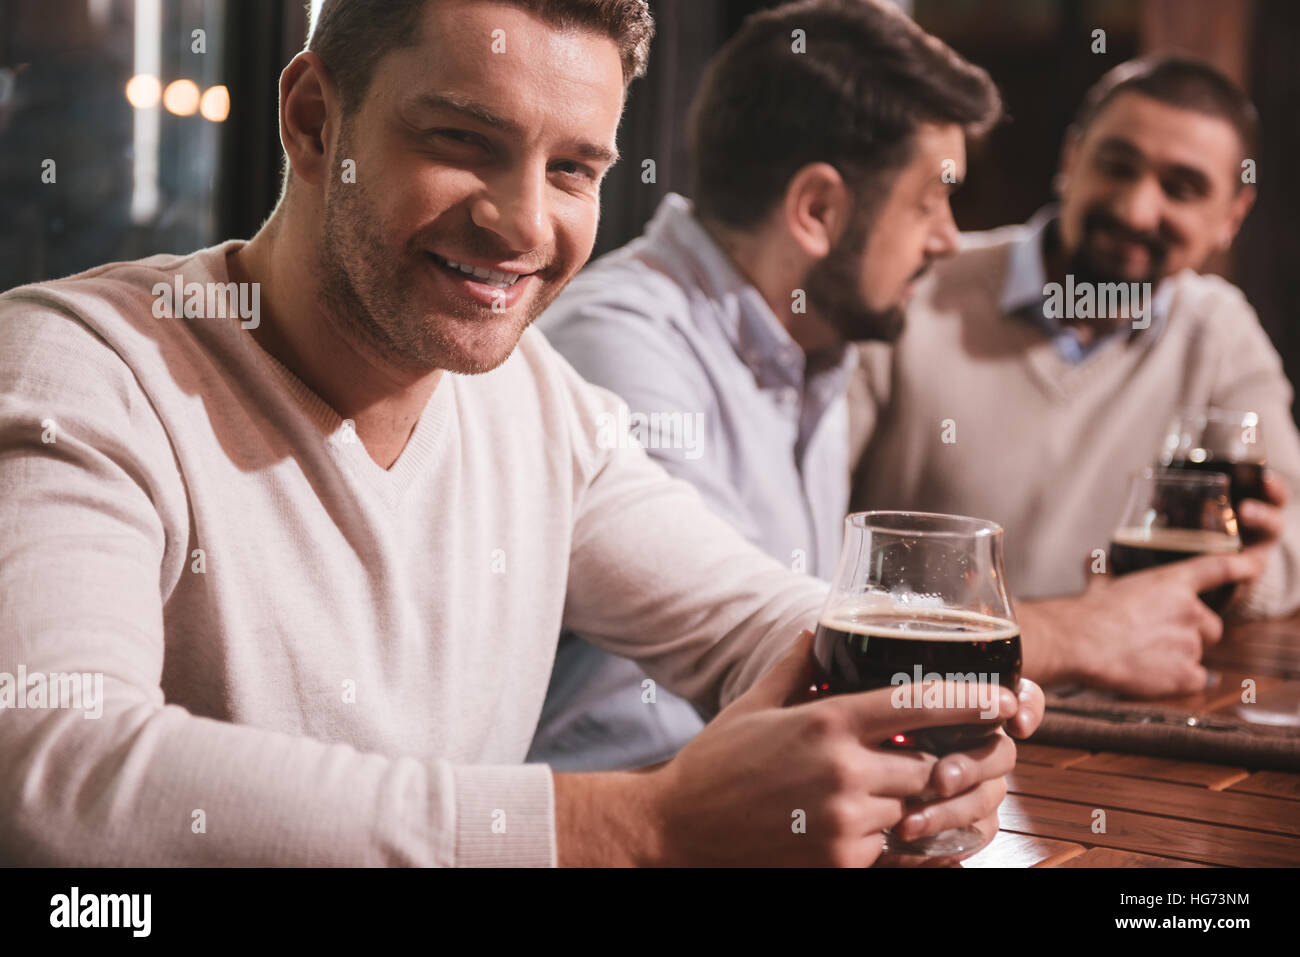 Attraente uomo sorridente seduto con i suoi amici al tavolo Foto Stock